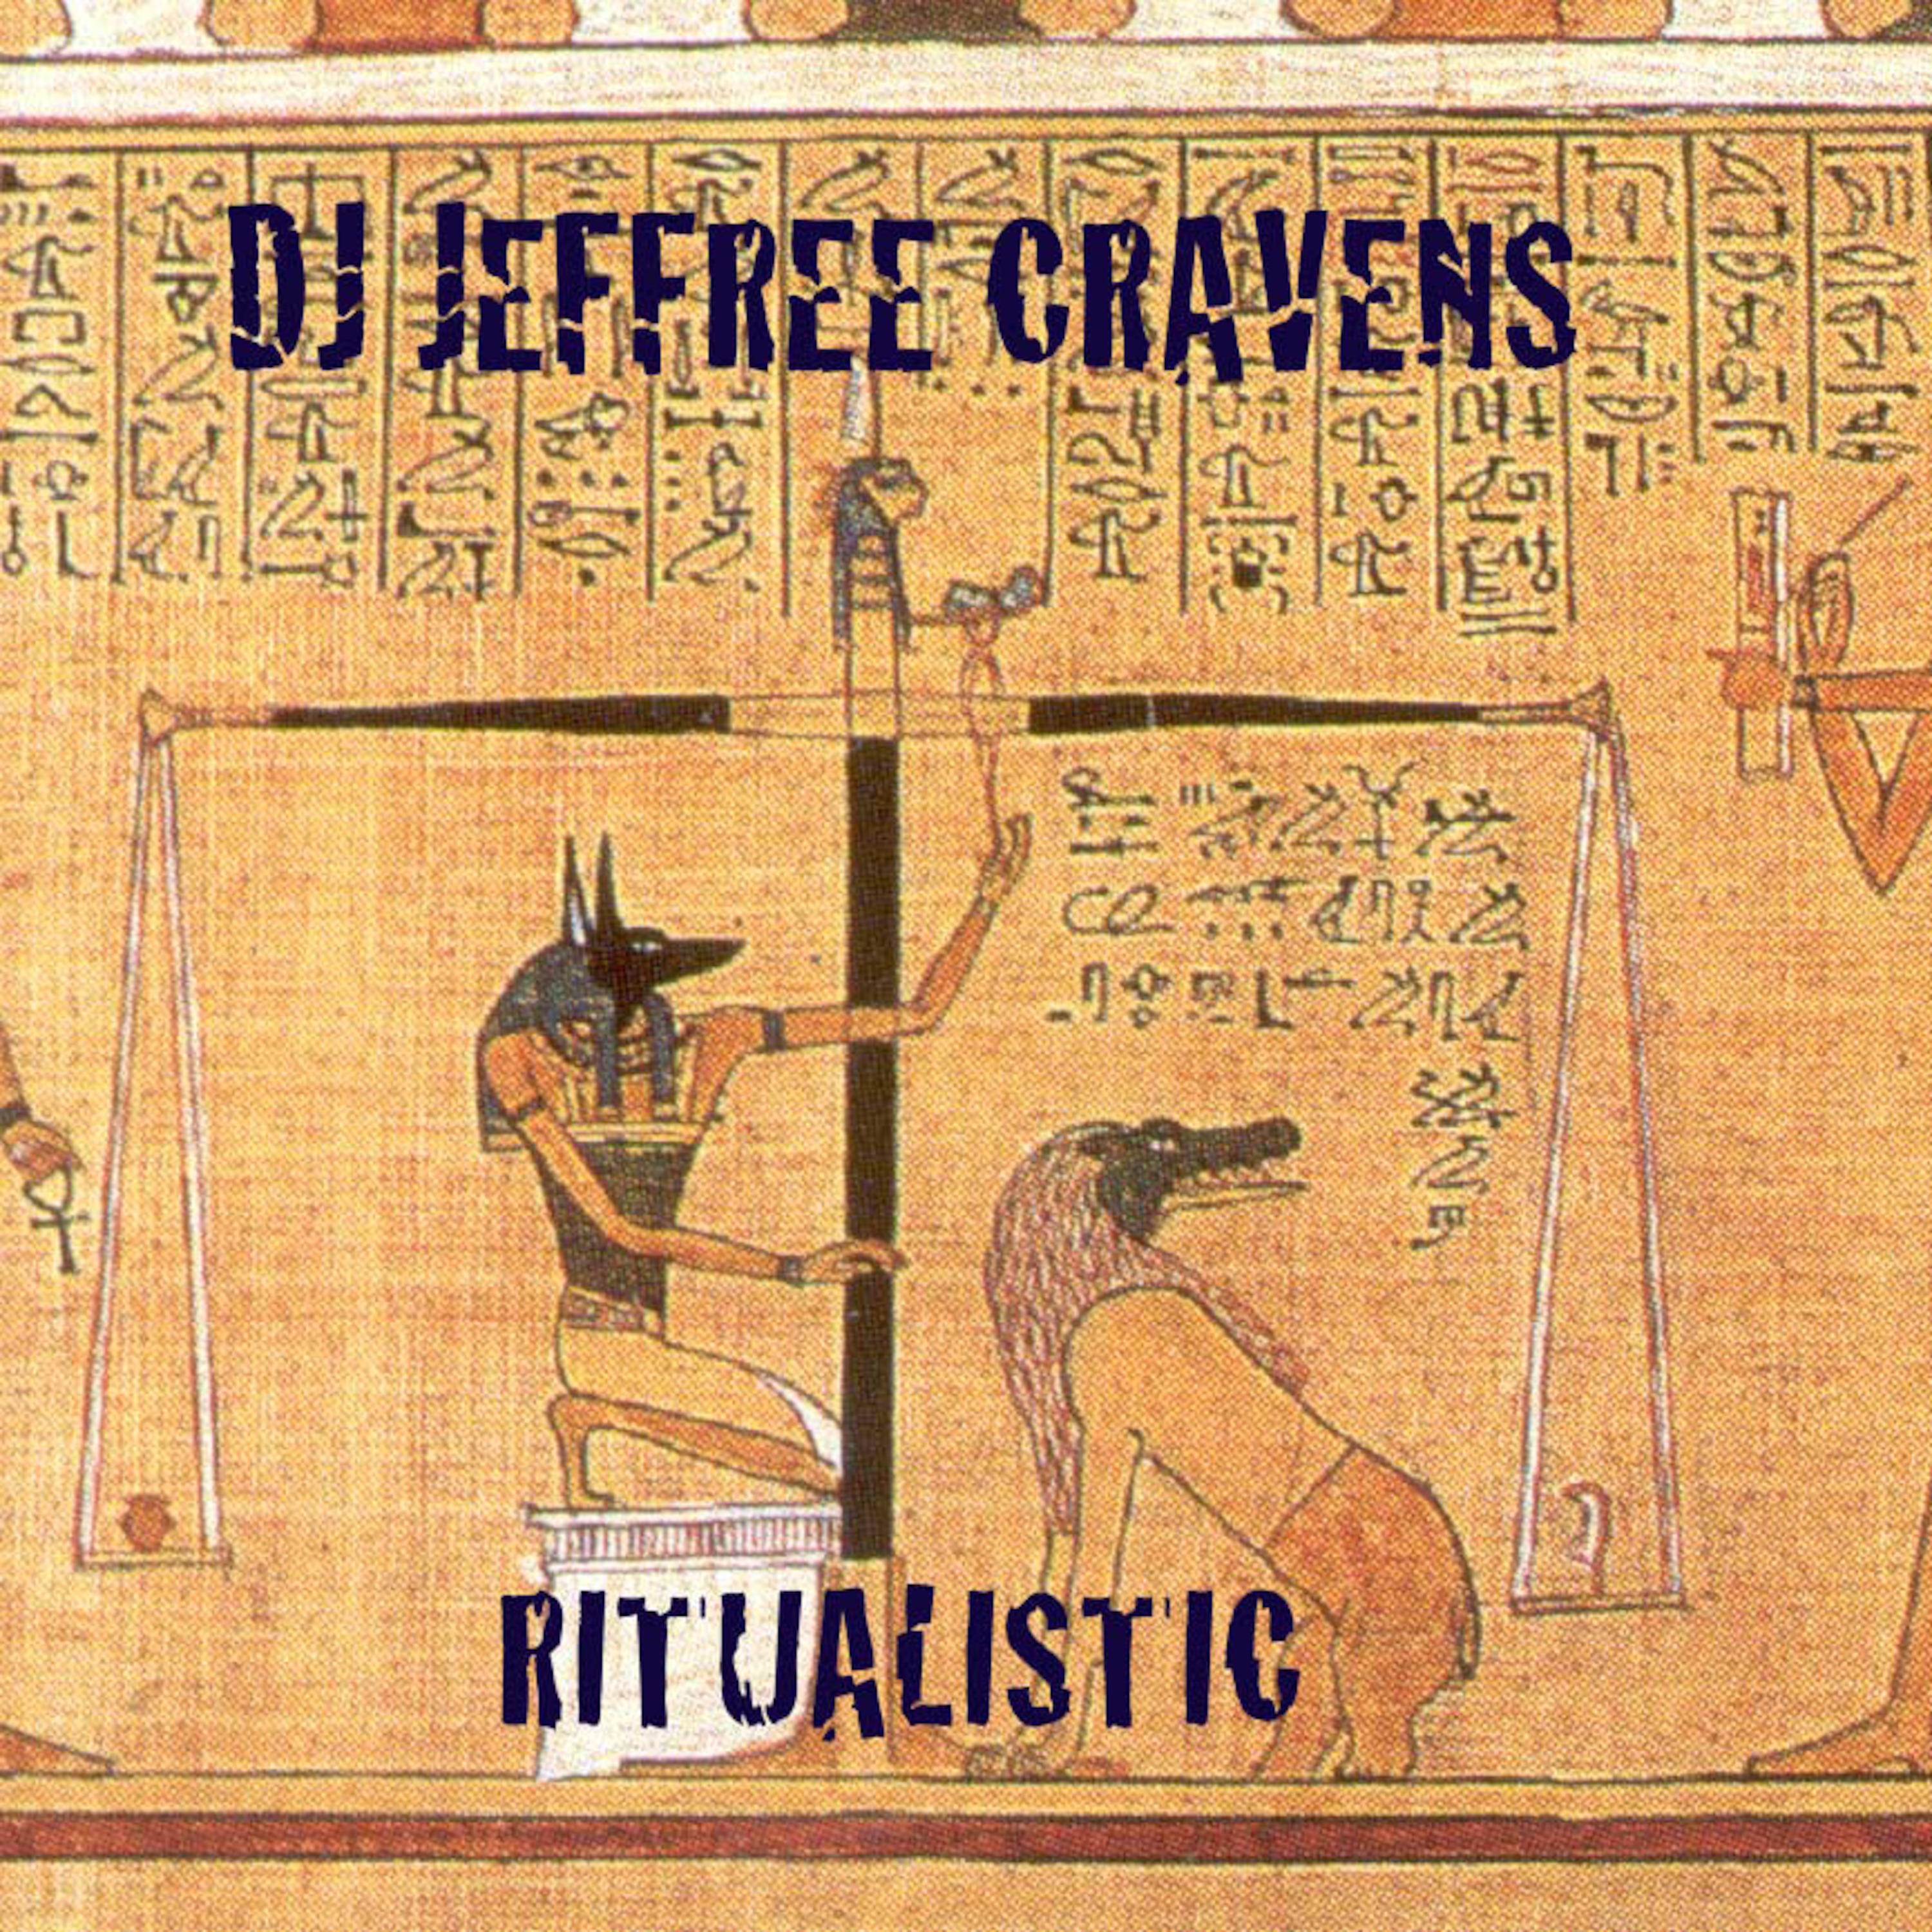 DJ Jeffree Cravens - Ritualistic (Live Mixshow)